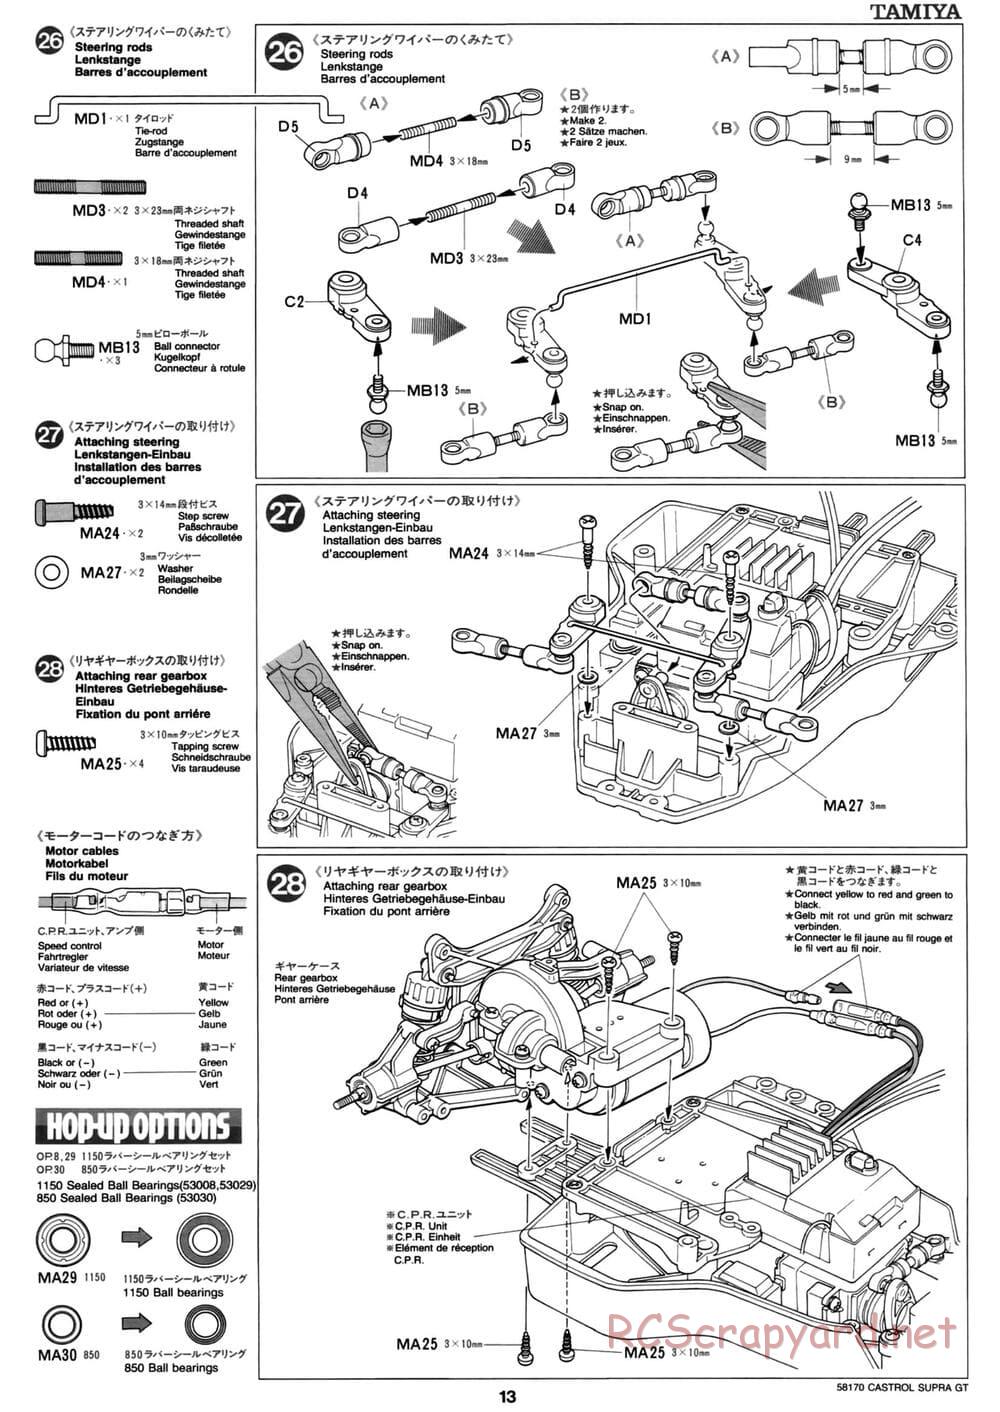 Tamiya - Castrol Toyota Tom's Supra GT - TA-02W Chassis - Manual - Page 13